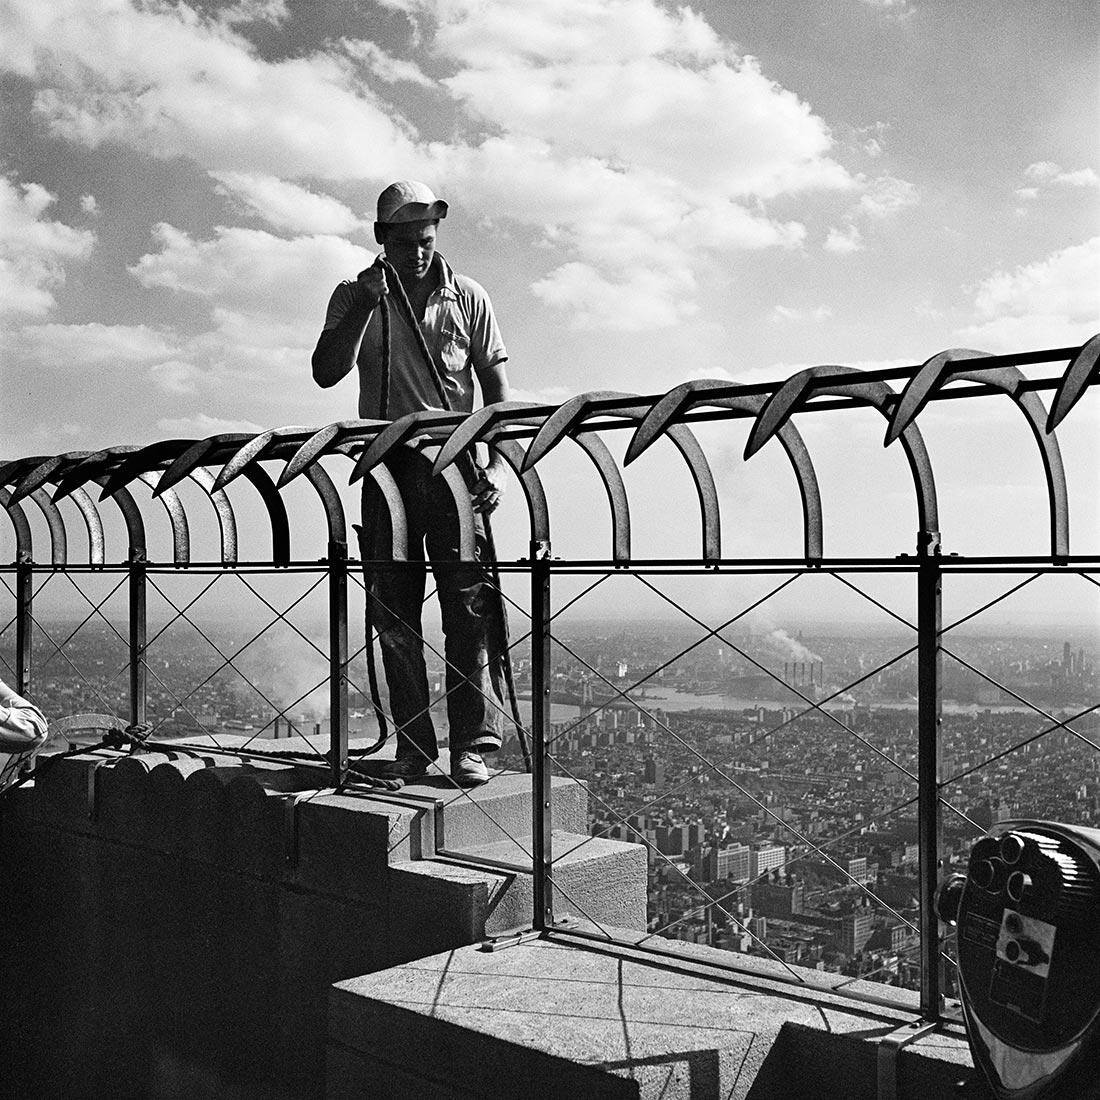 Смотровая площадка Эмпайр-стейт-билдинг, 1954 год, Нью-Йорк, штат Нью-Йорк. Фотограф Вивиан Майер